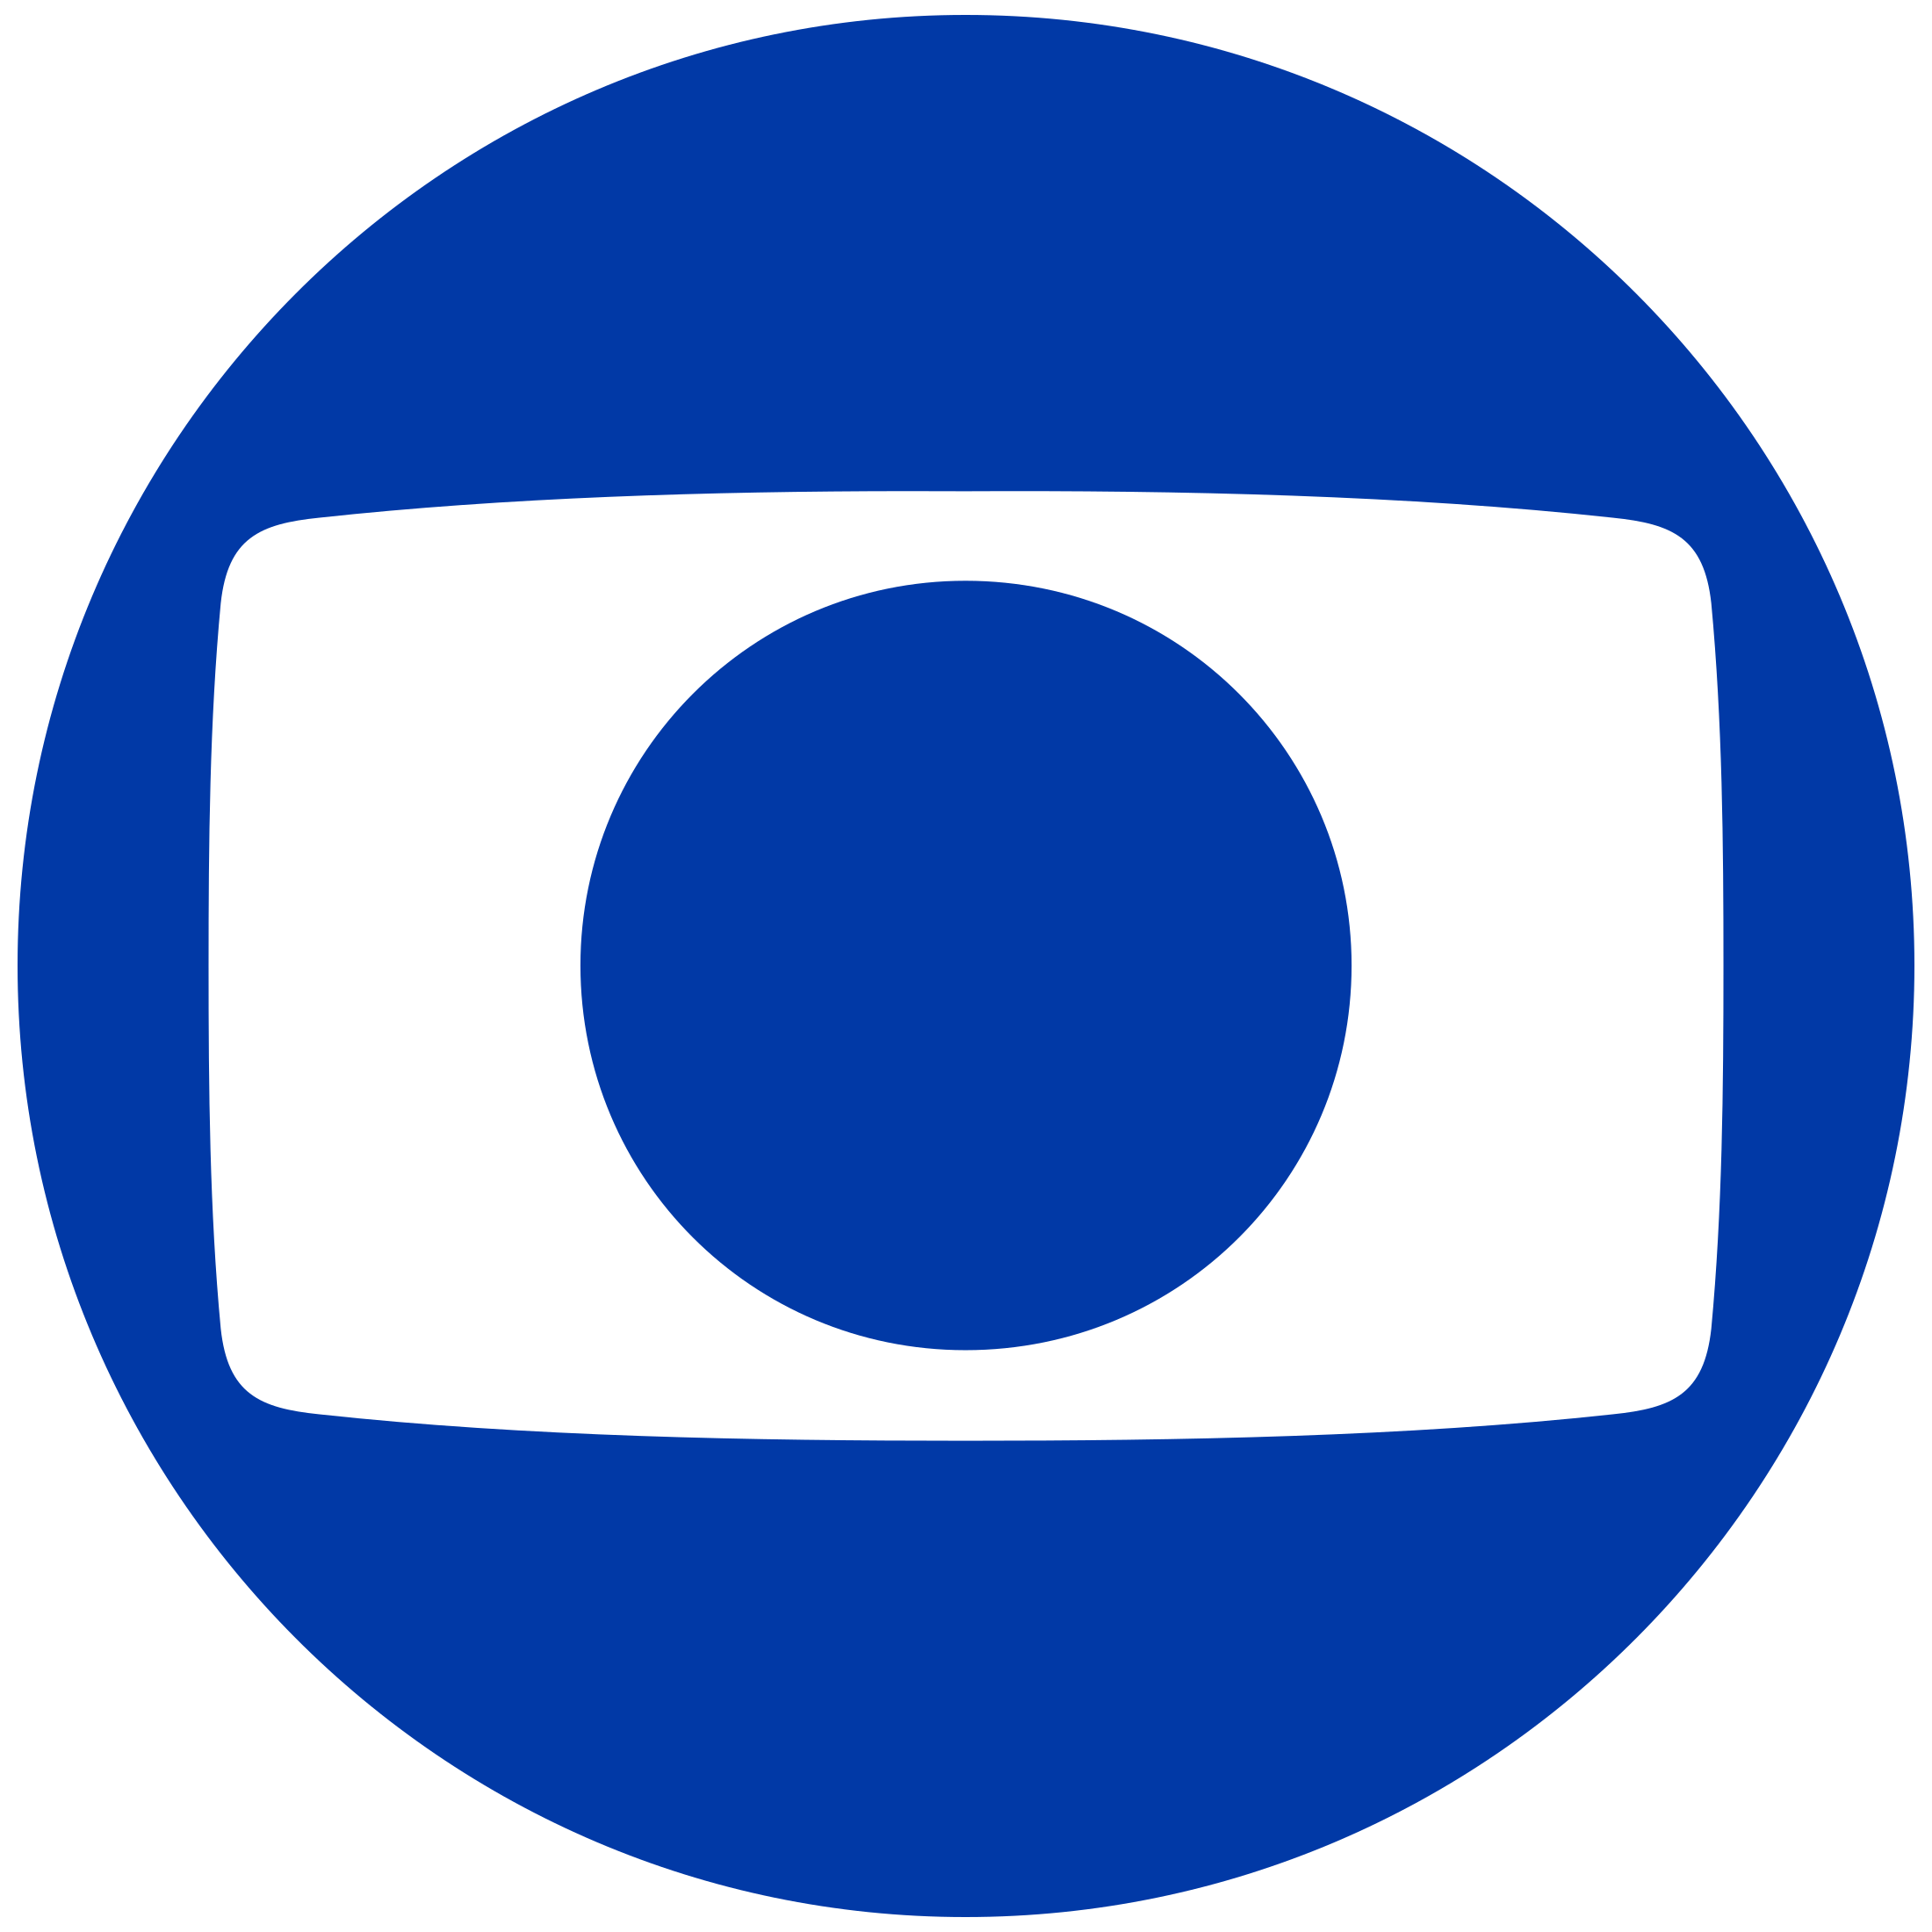 Rede Globo Logo Transparent Picture